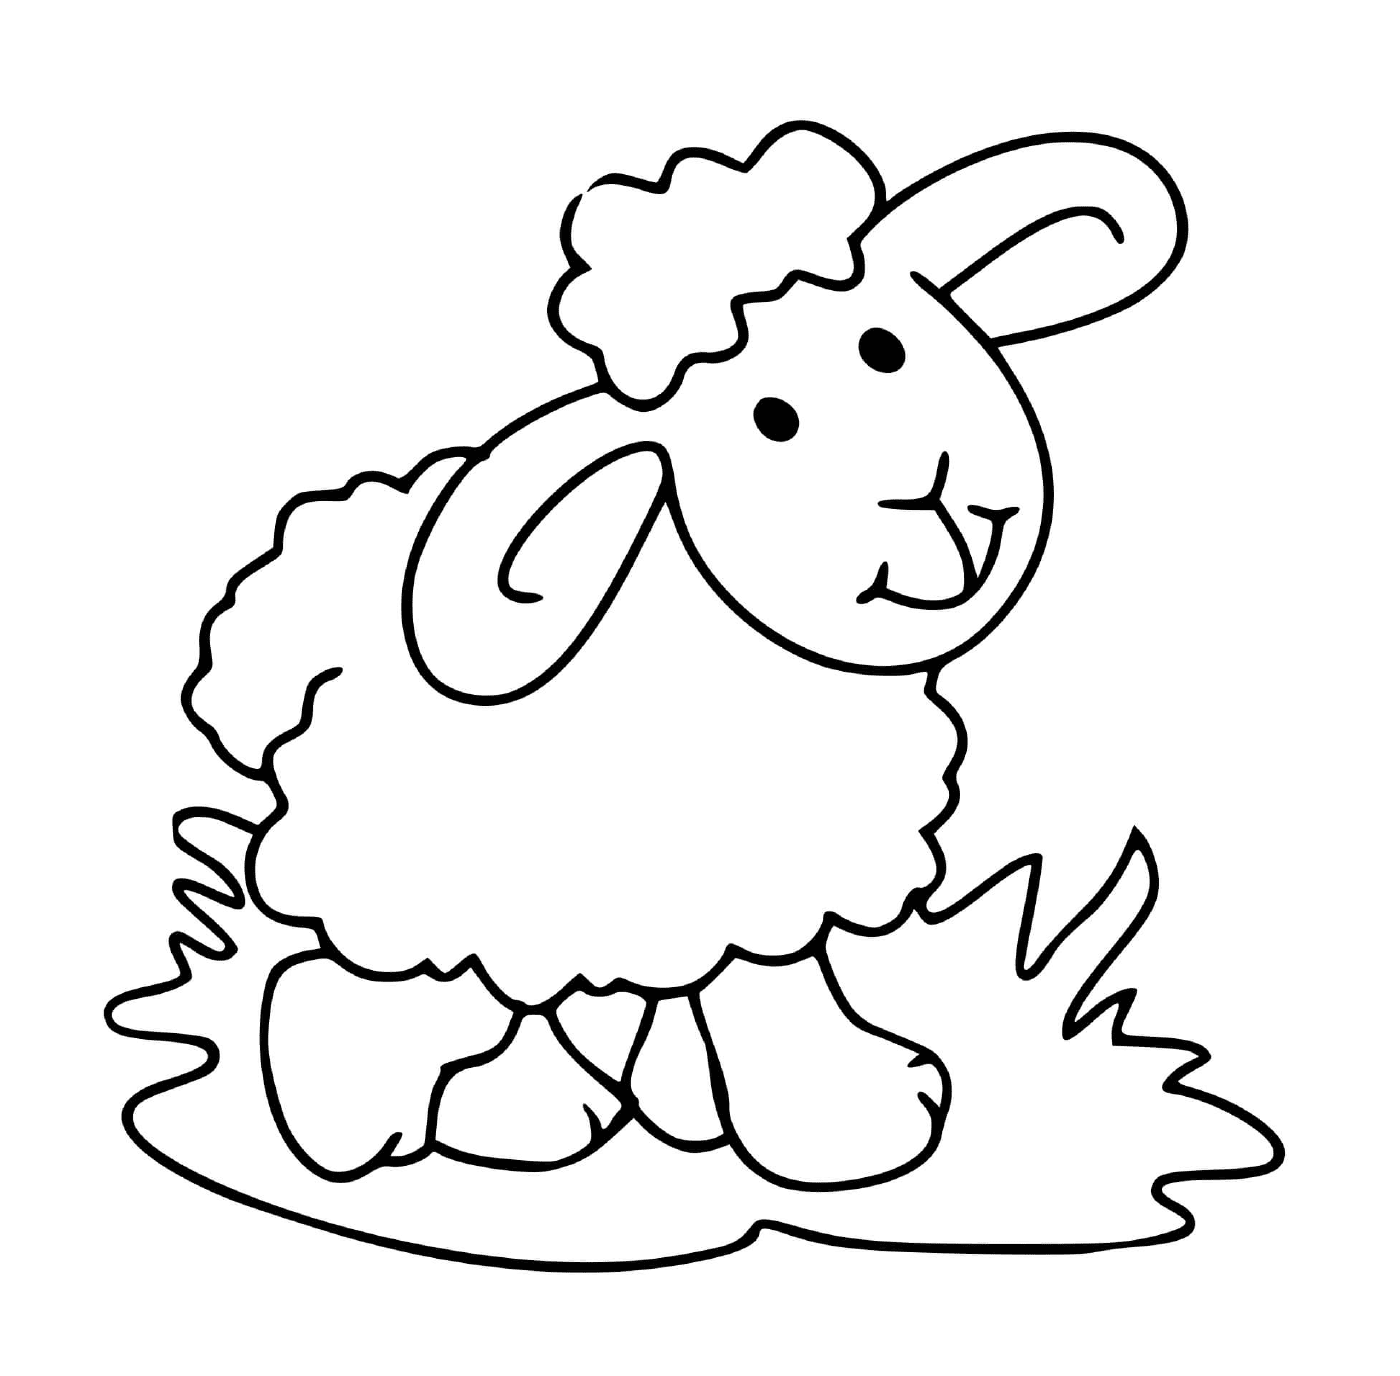  Mouton pasto tranquilo rozado 